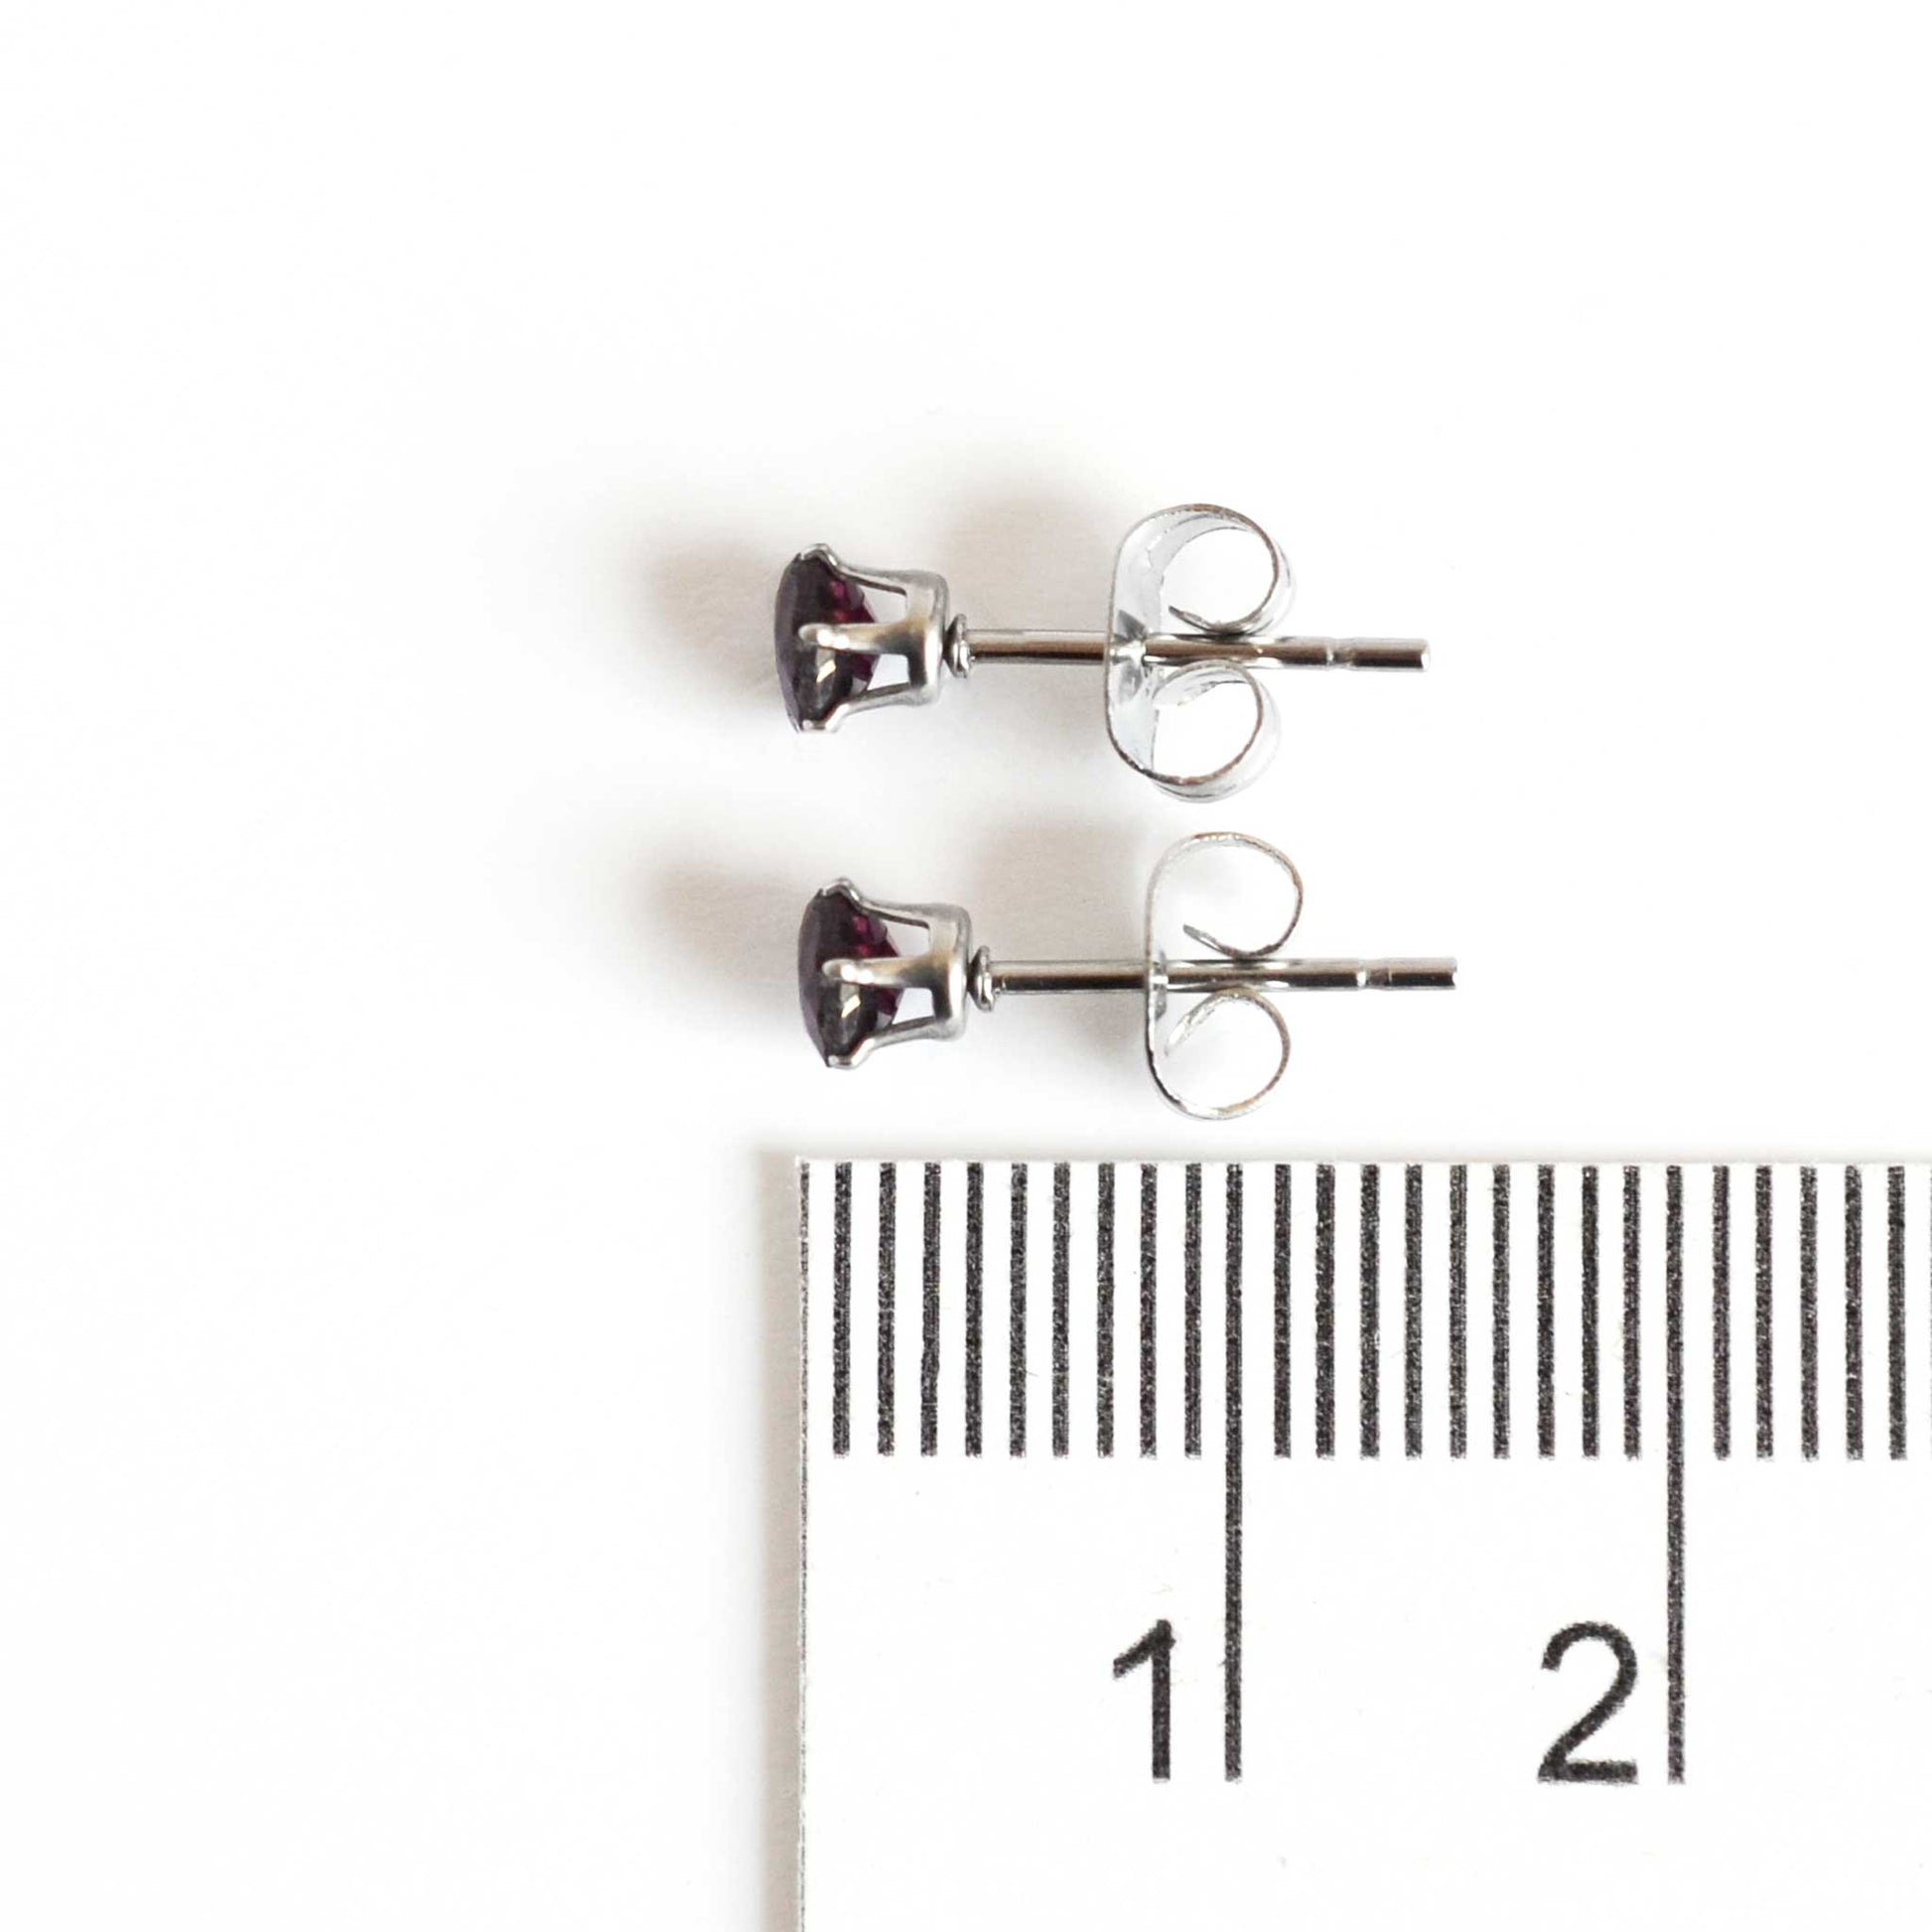 4mm Garnet stud earrings next to ruler